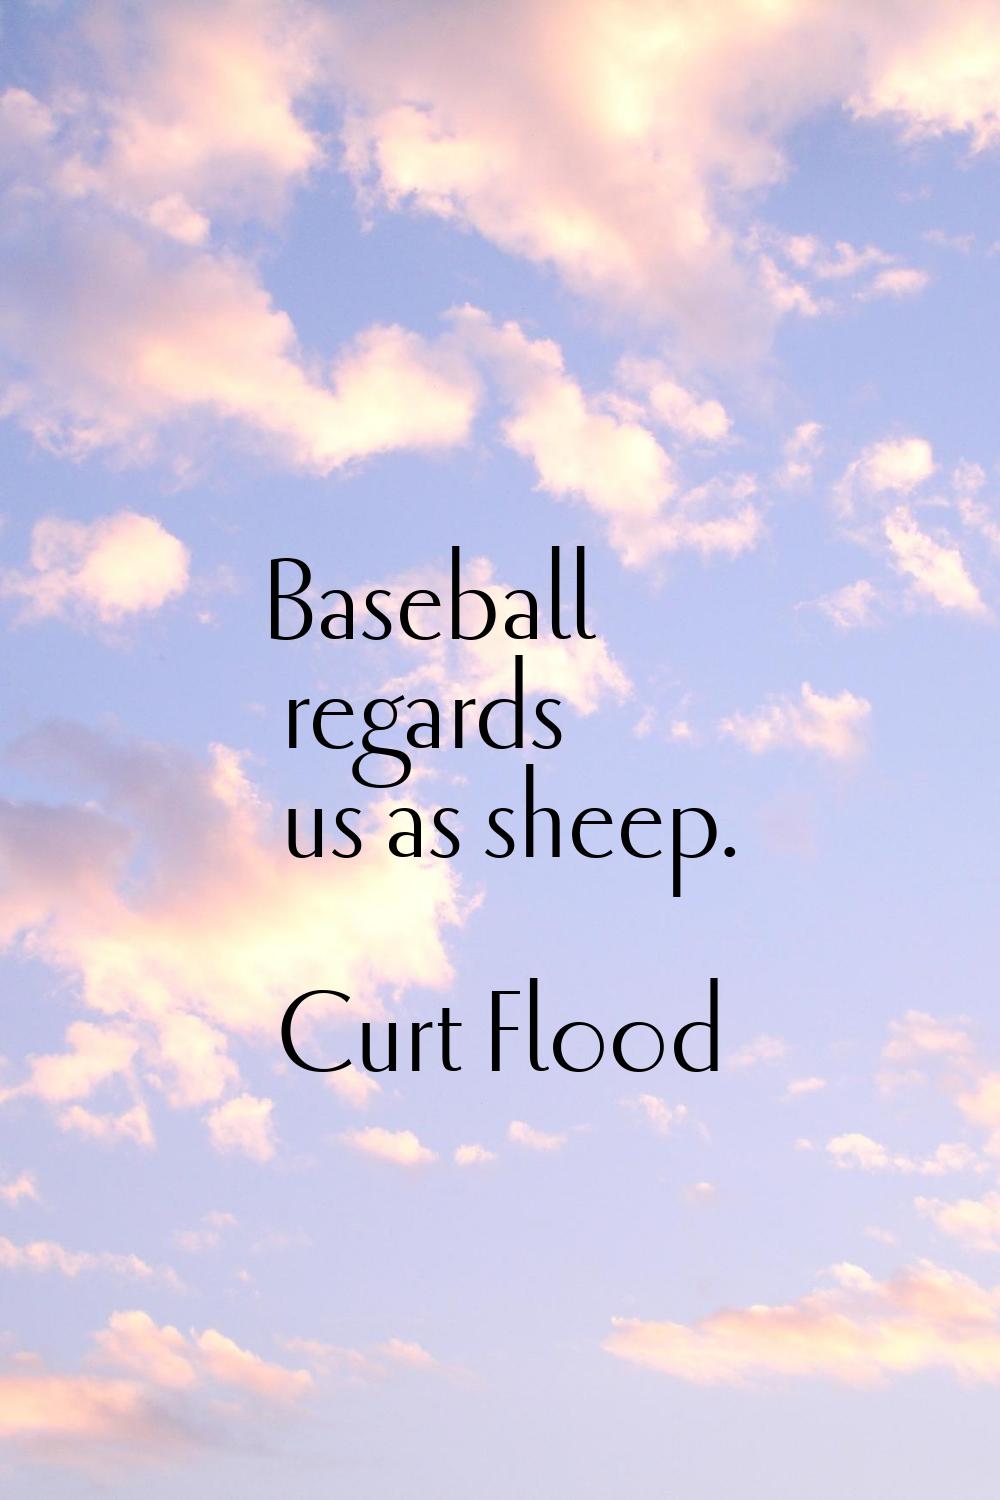 Baseball regards us as sheep.